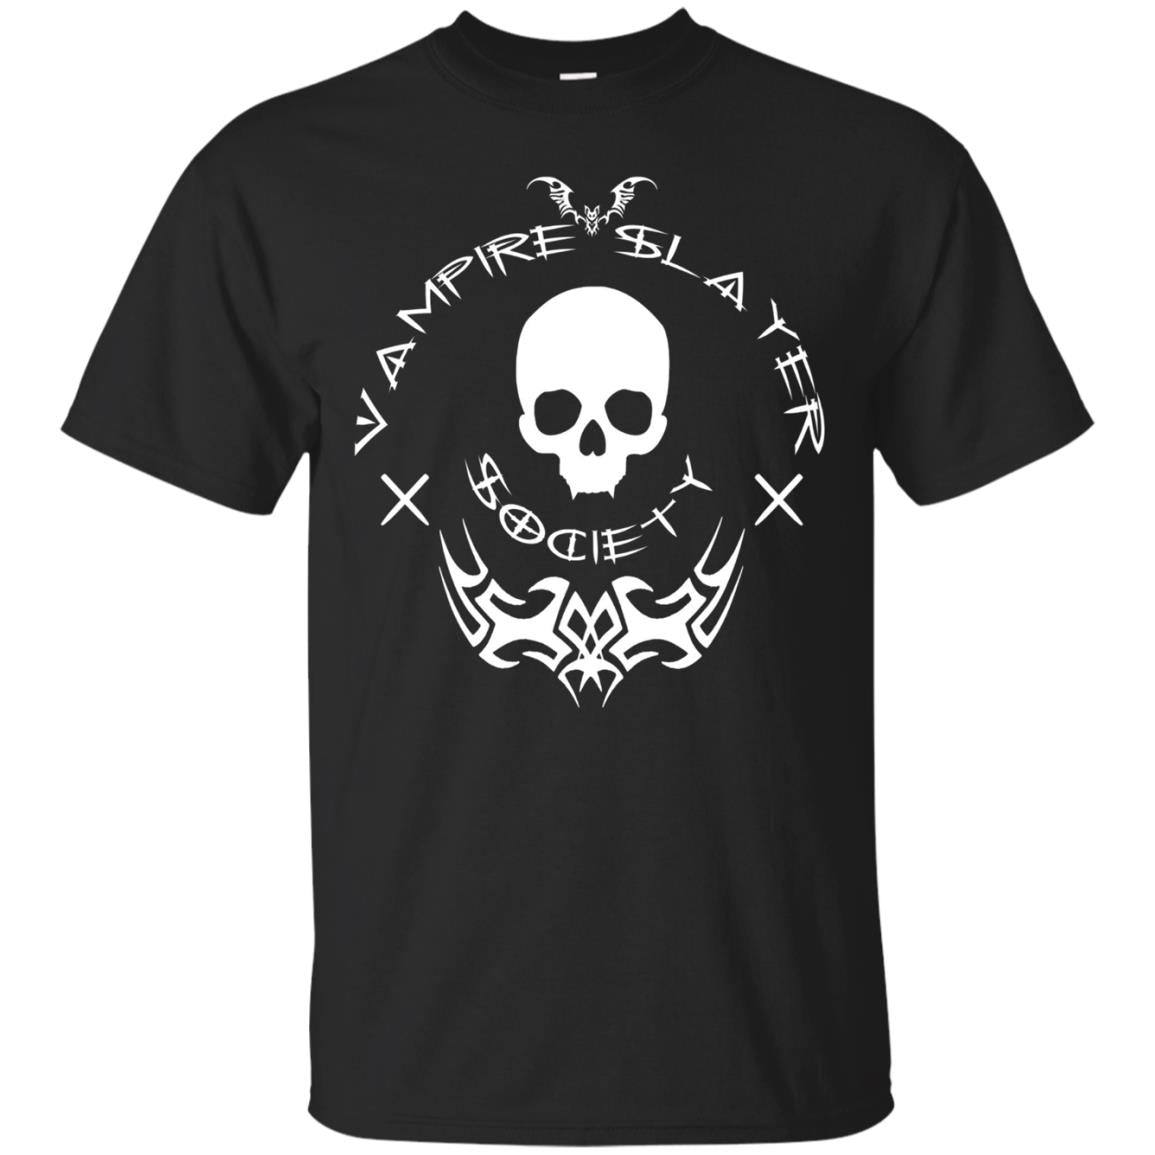 Vampire Slayer Society - Halloween Vamp Hunter Shirt W/font